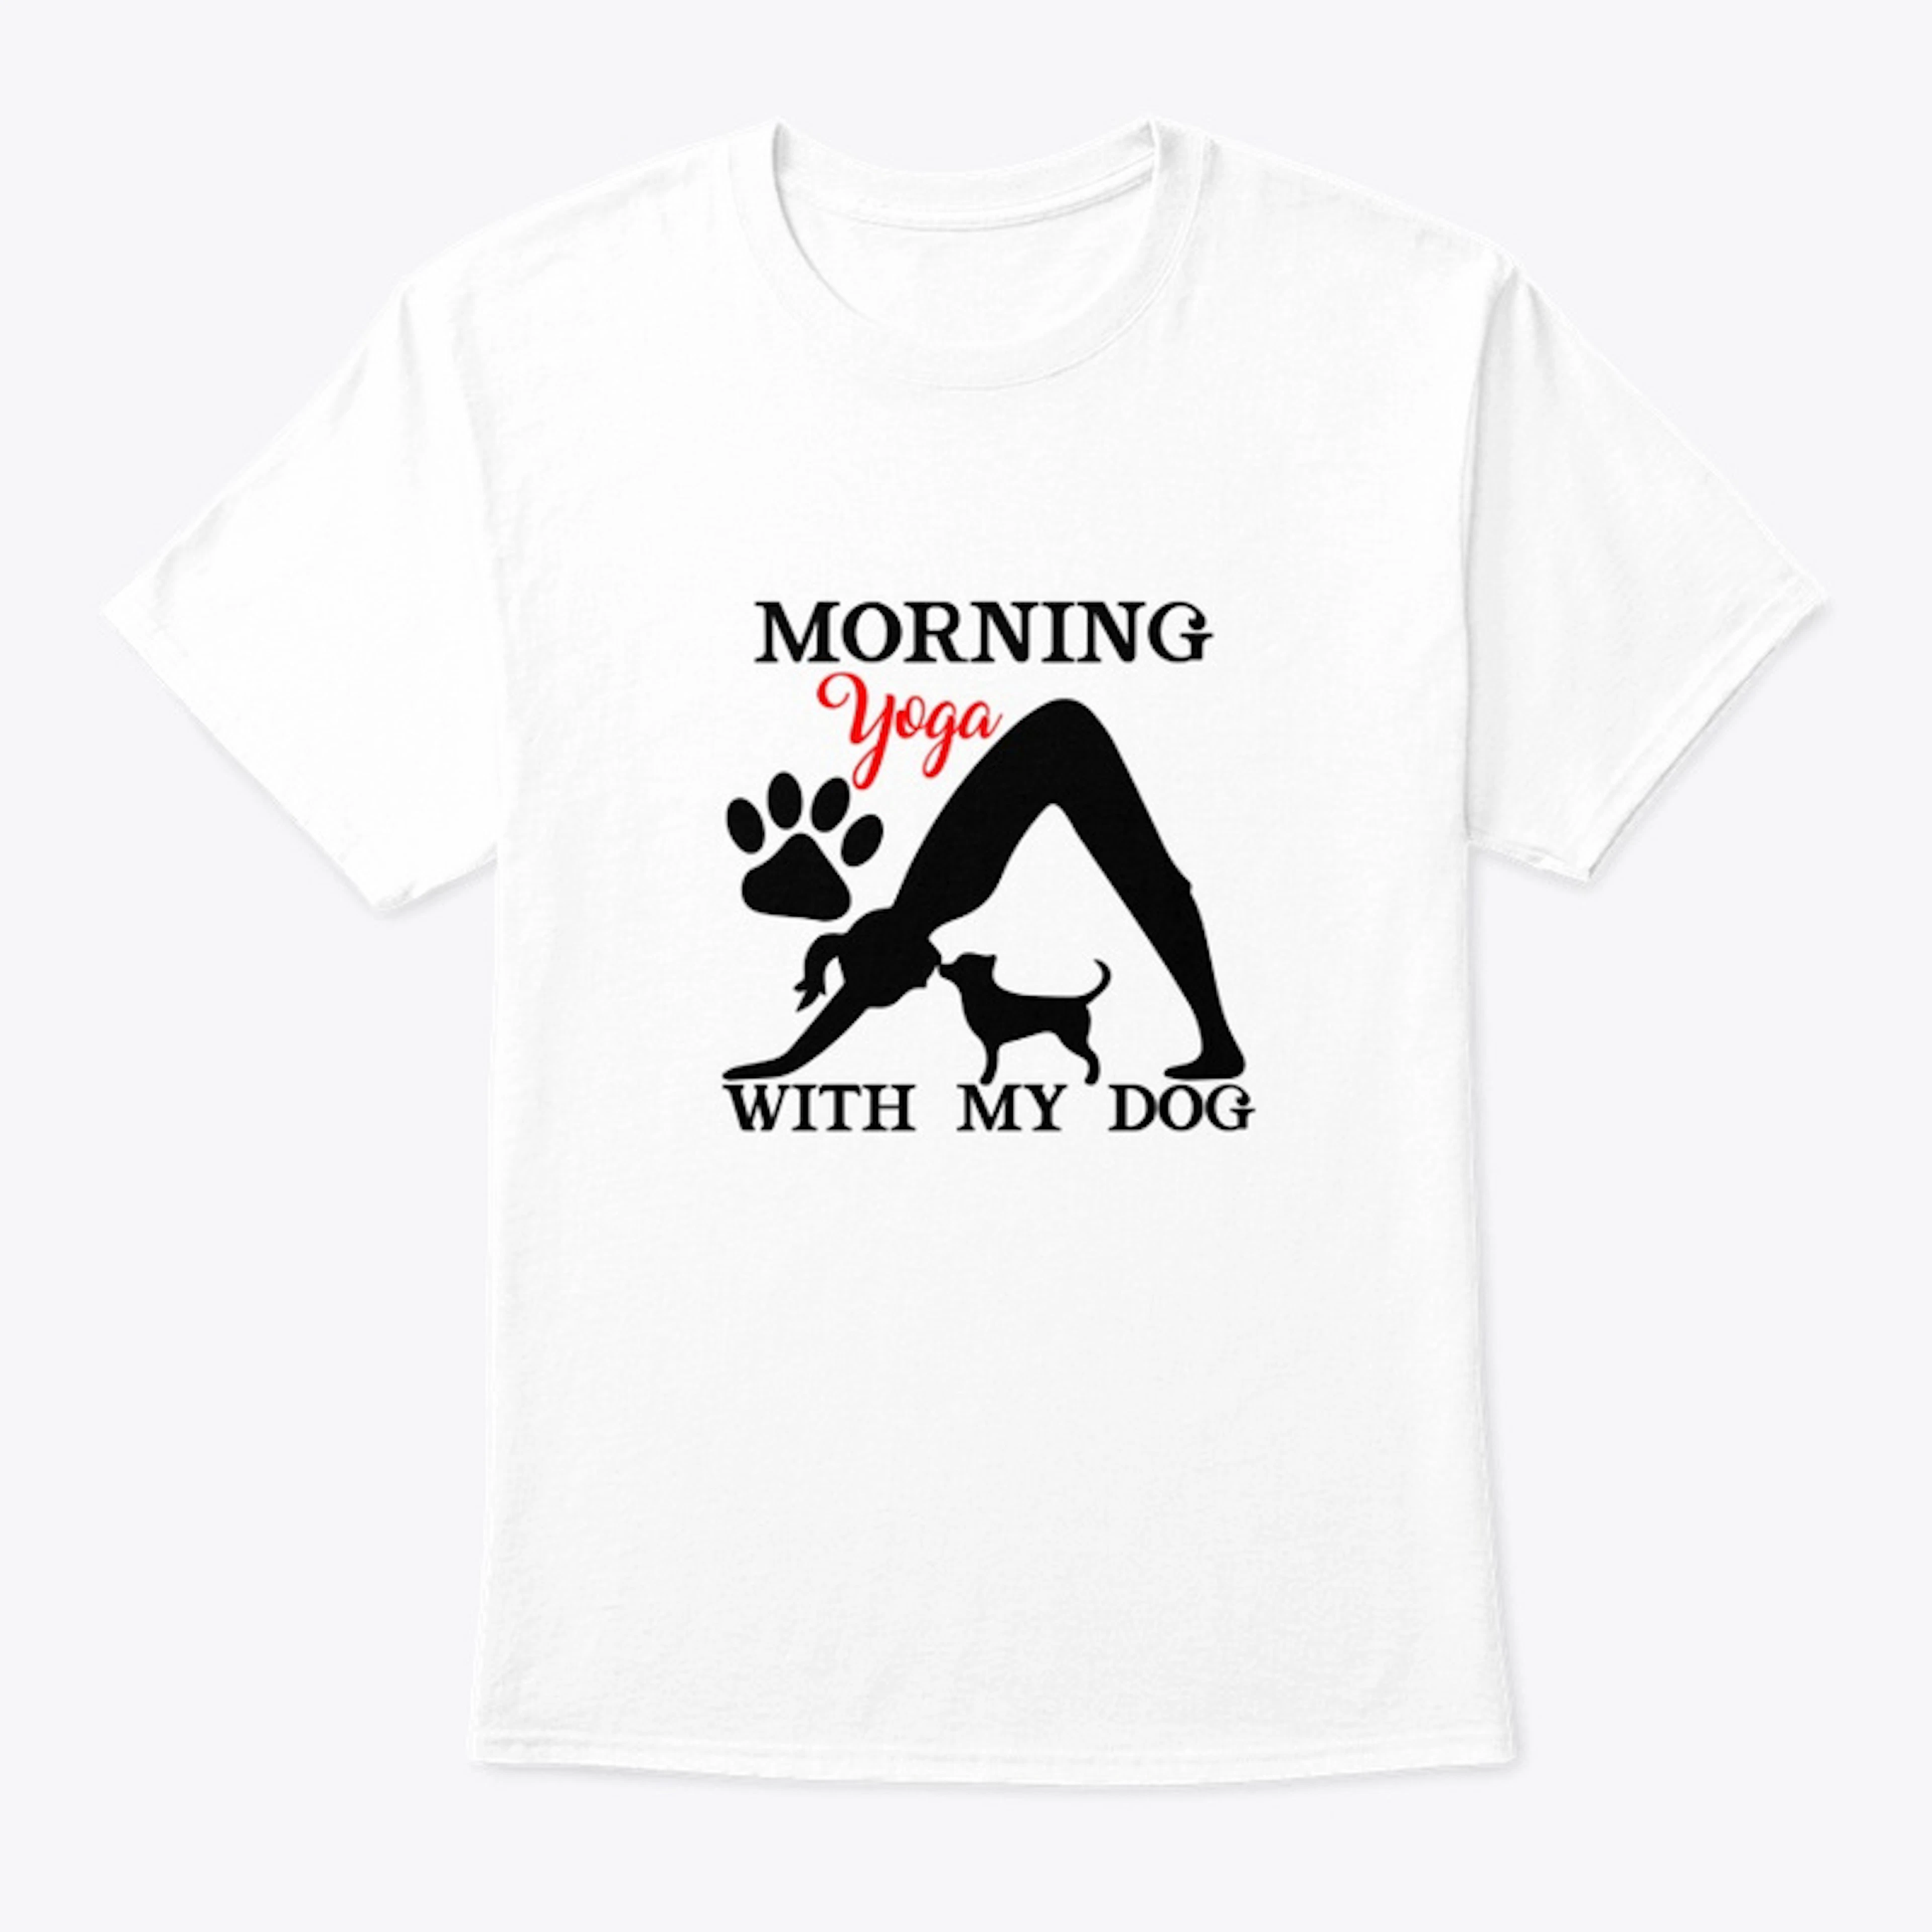 Morning yoga with my dog 